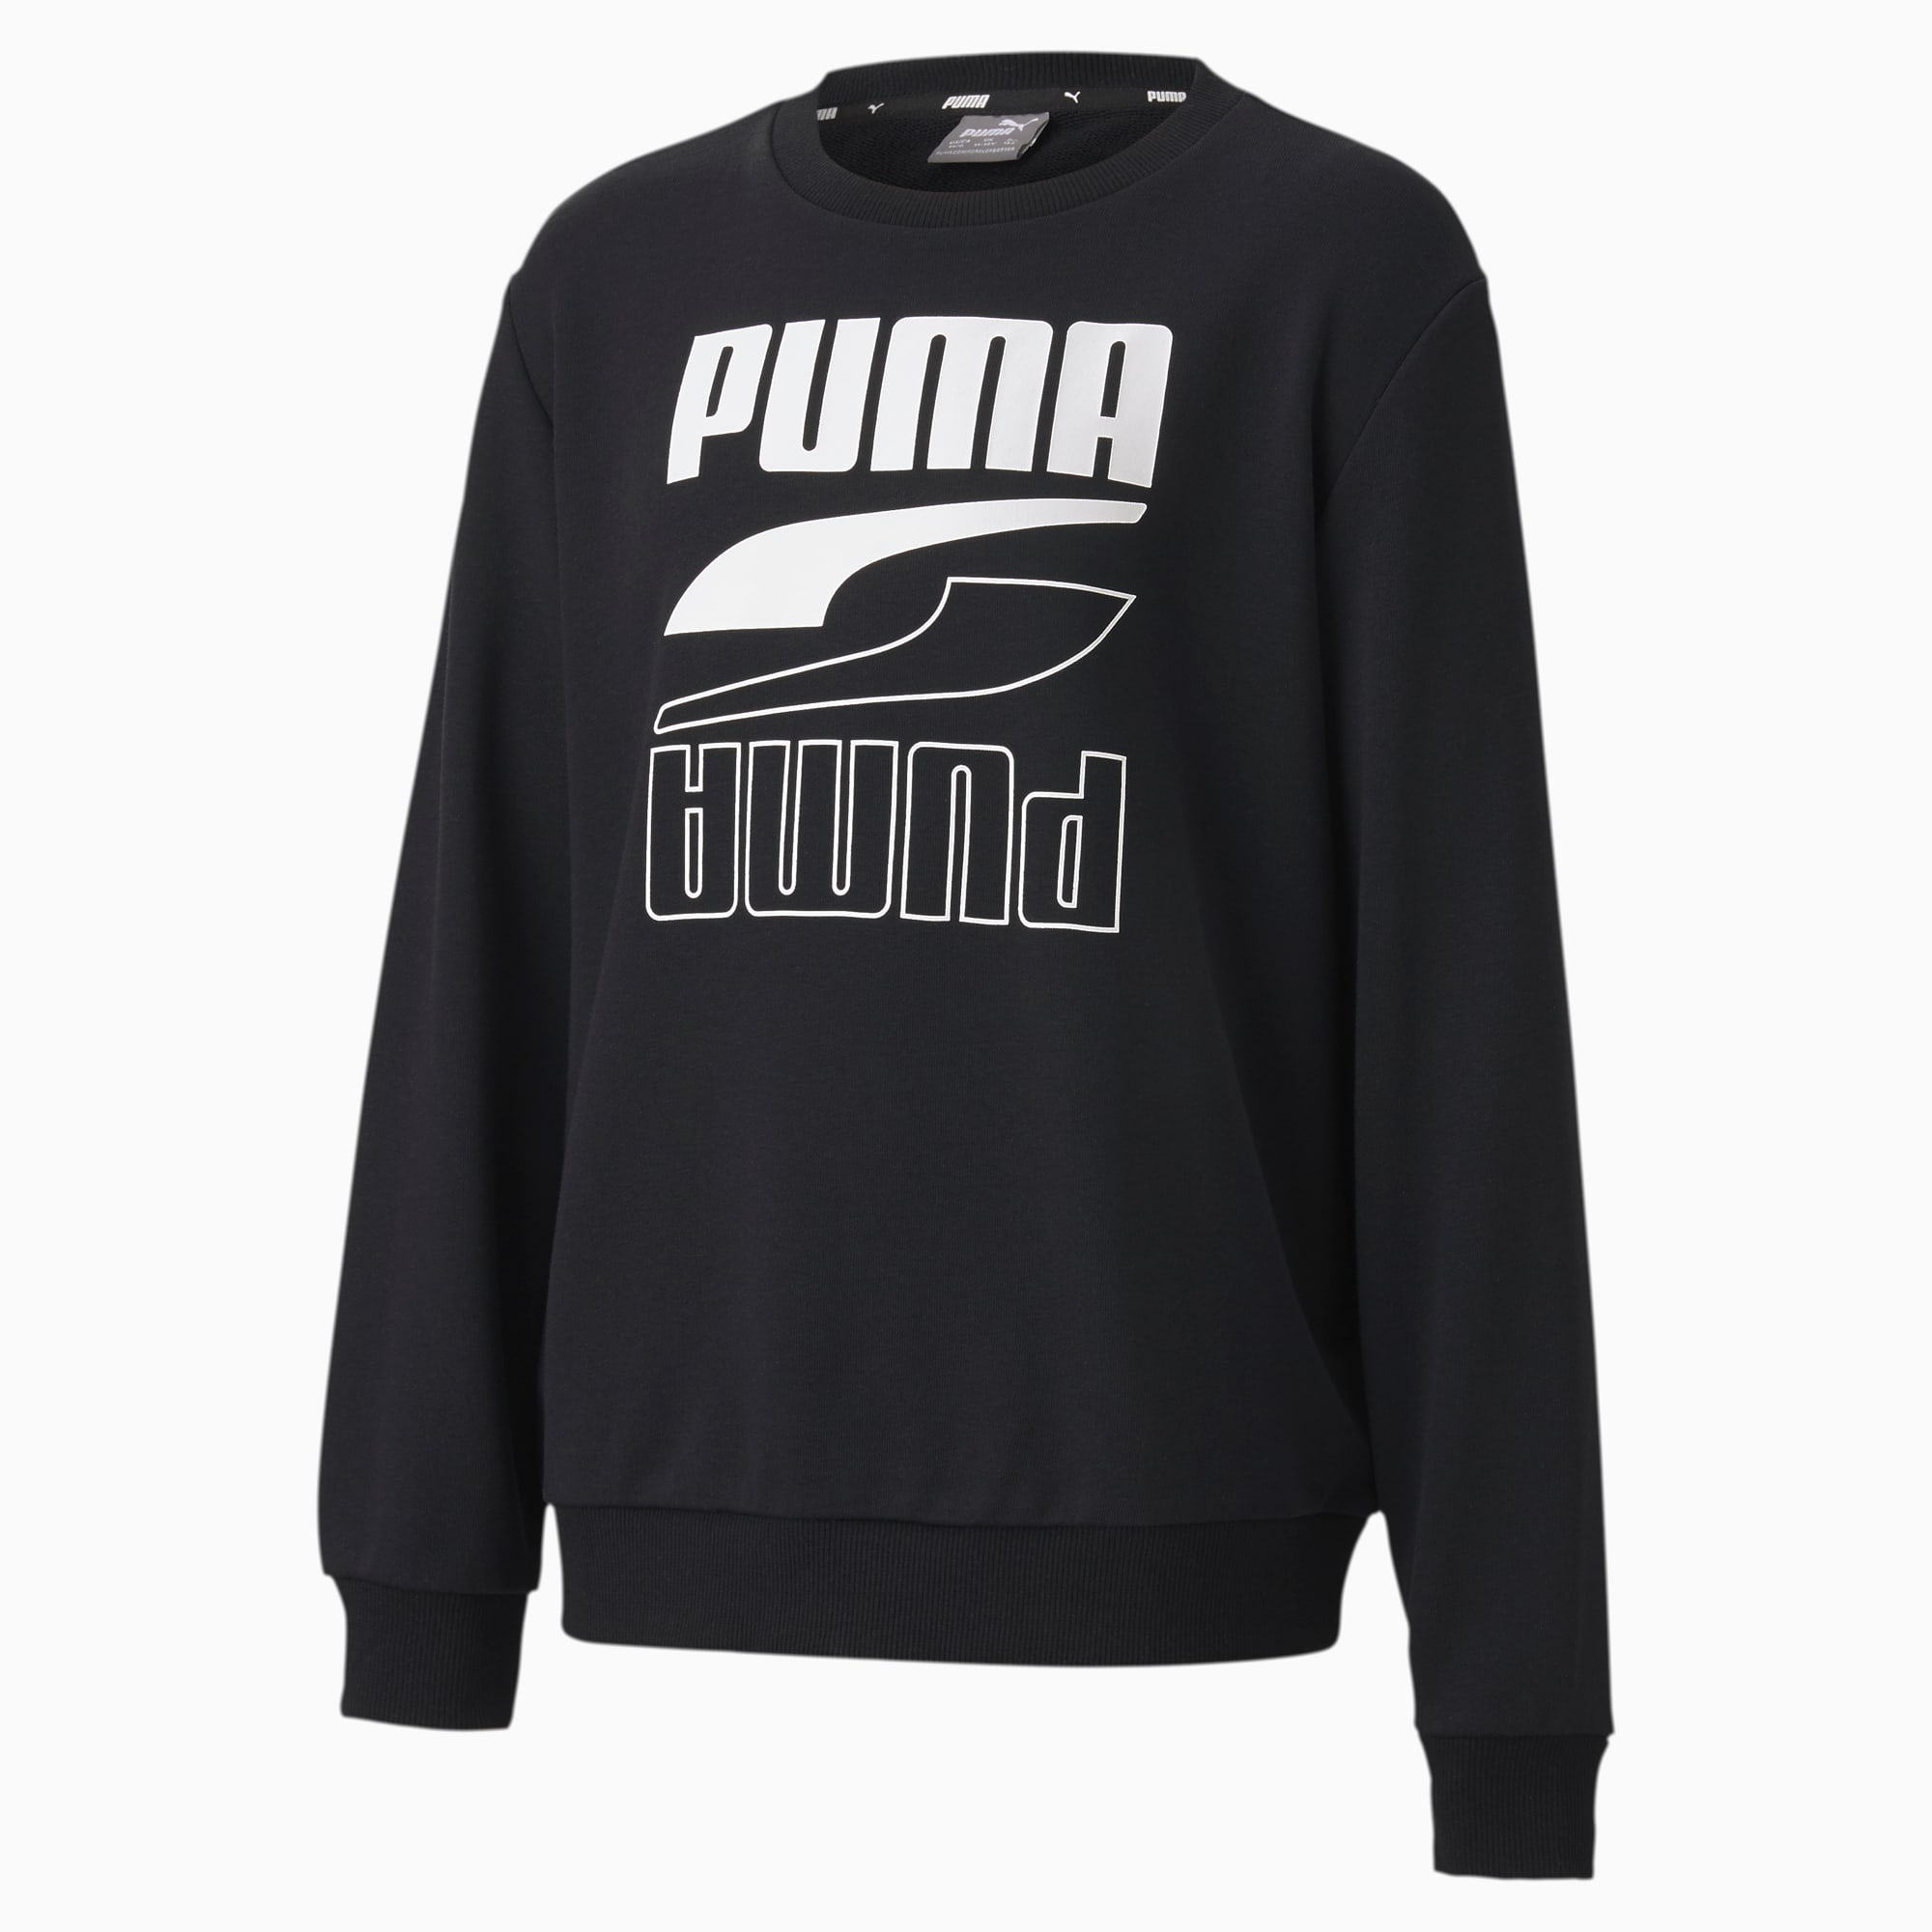 puma long sweatshirt